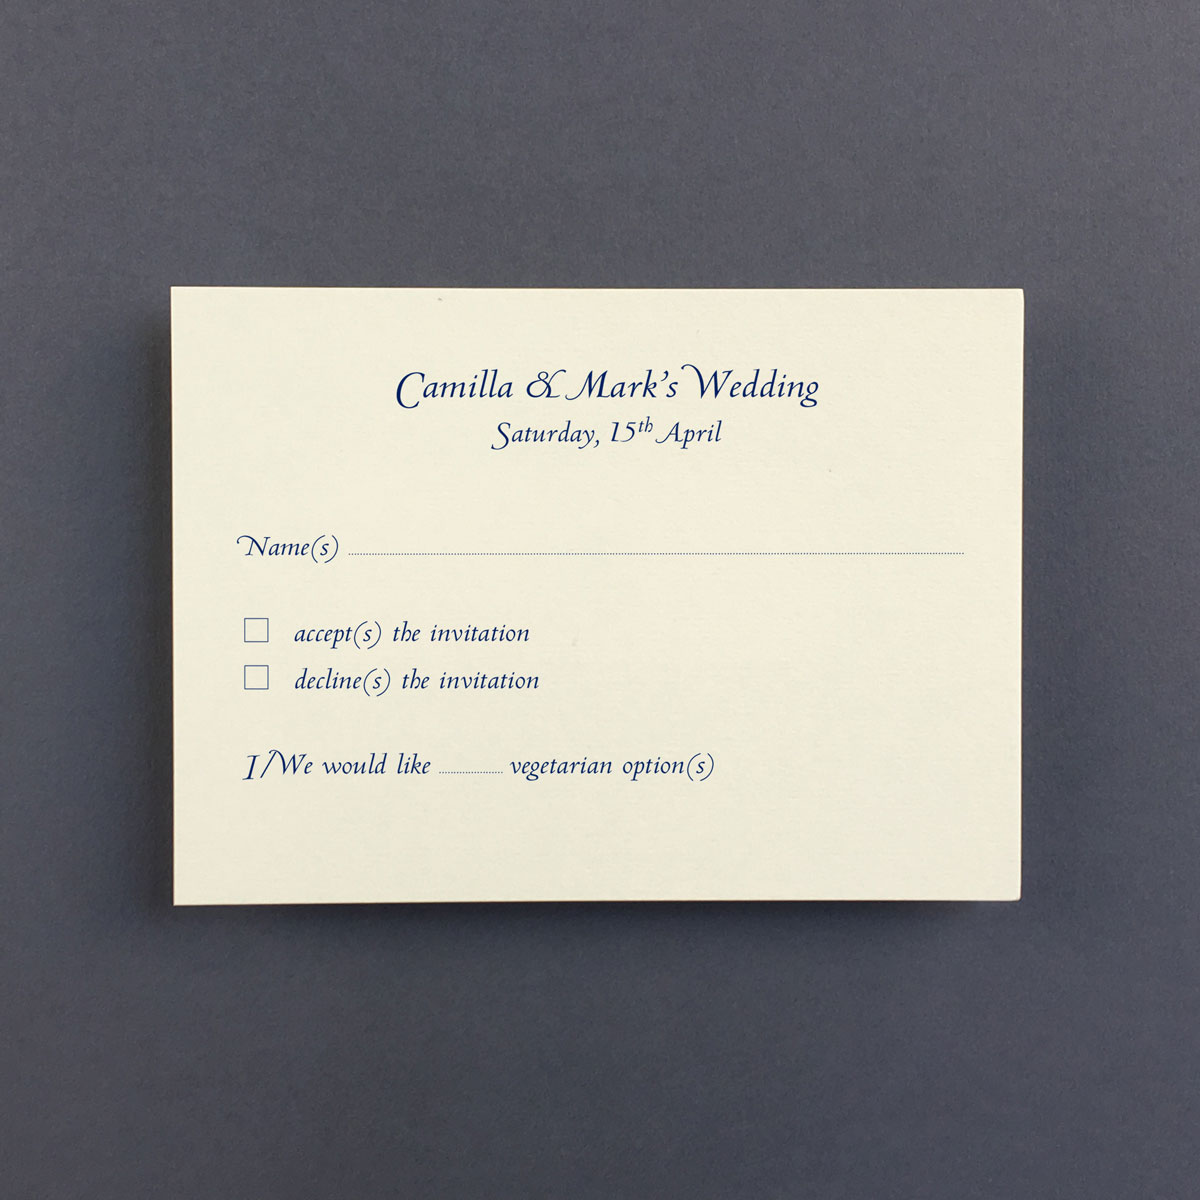 Camilla Reply Cards - Wedding Stationery